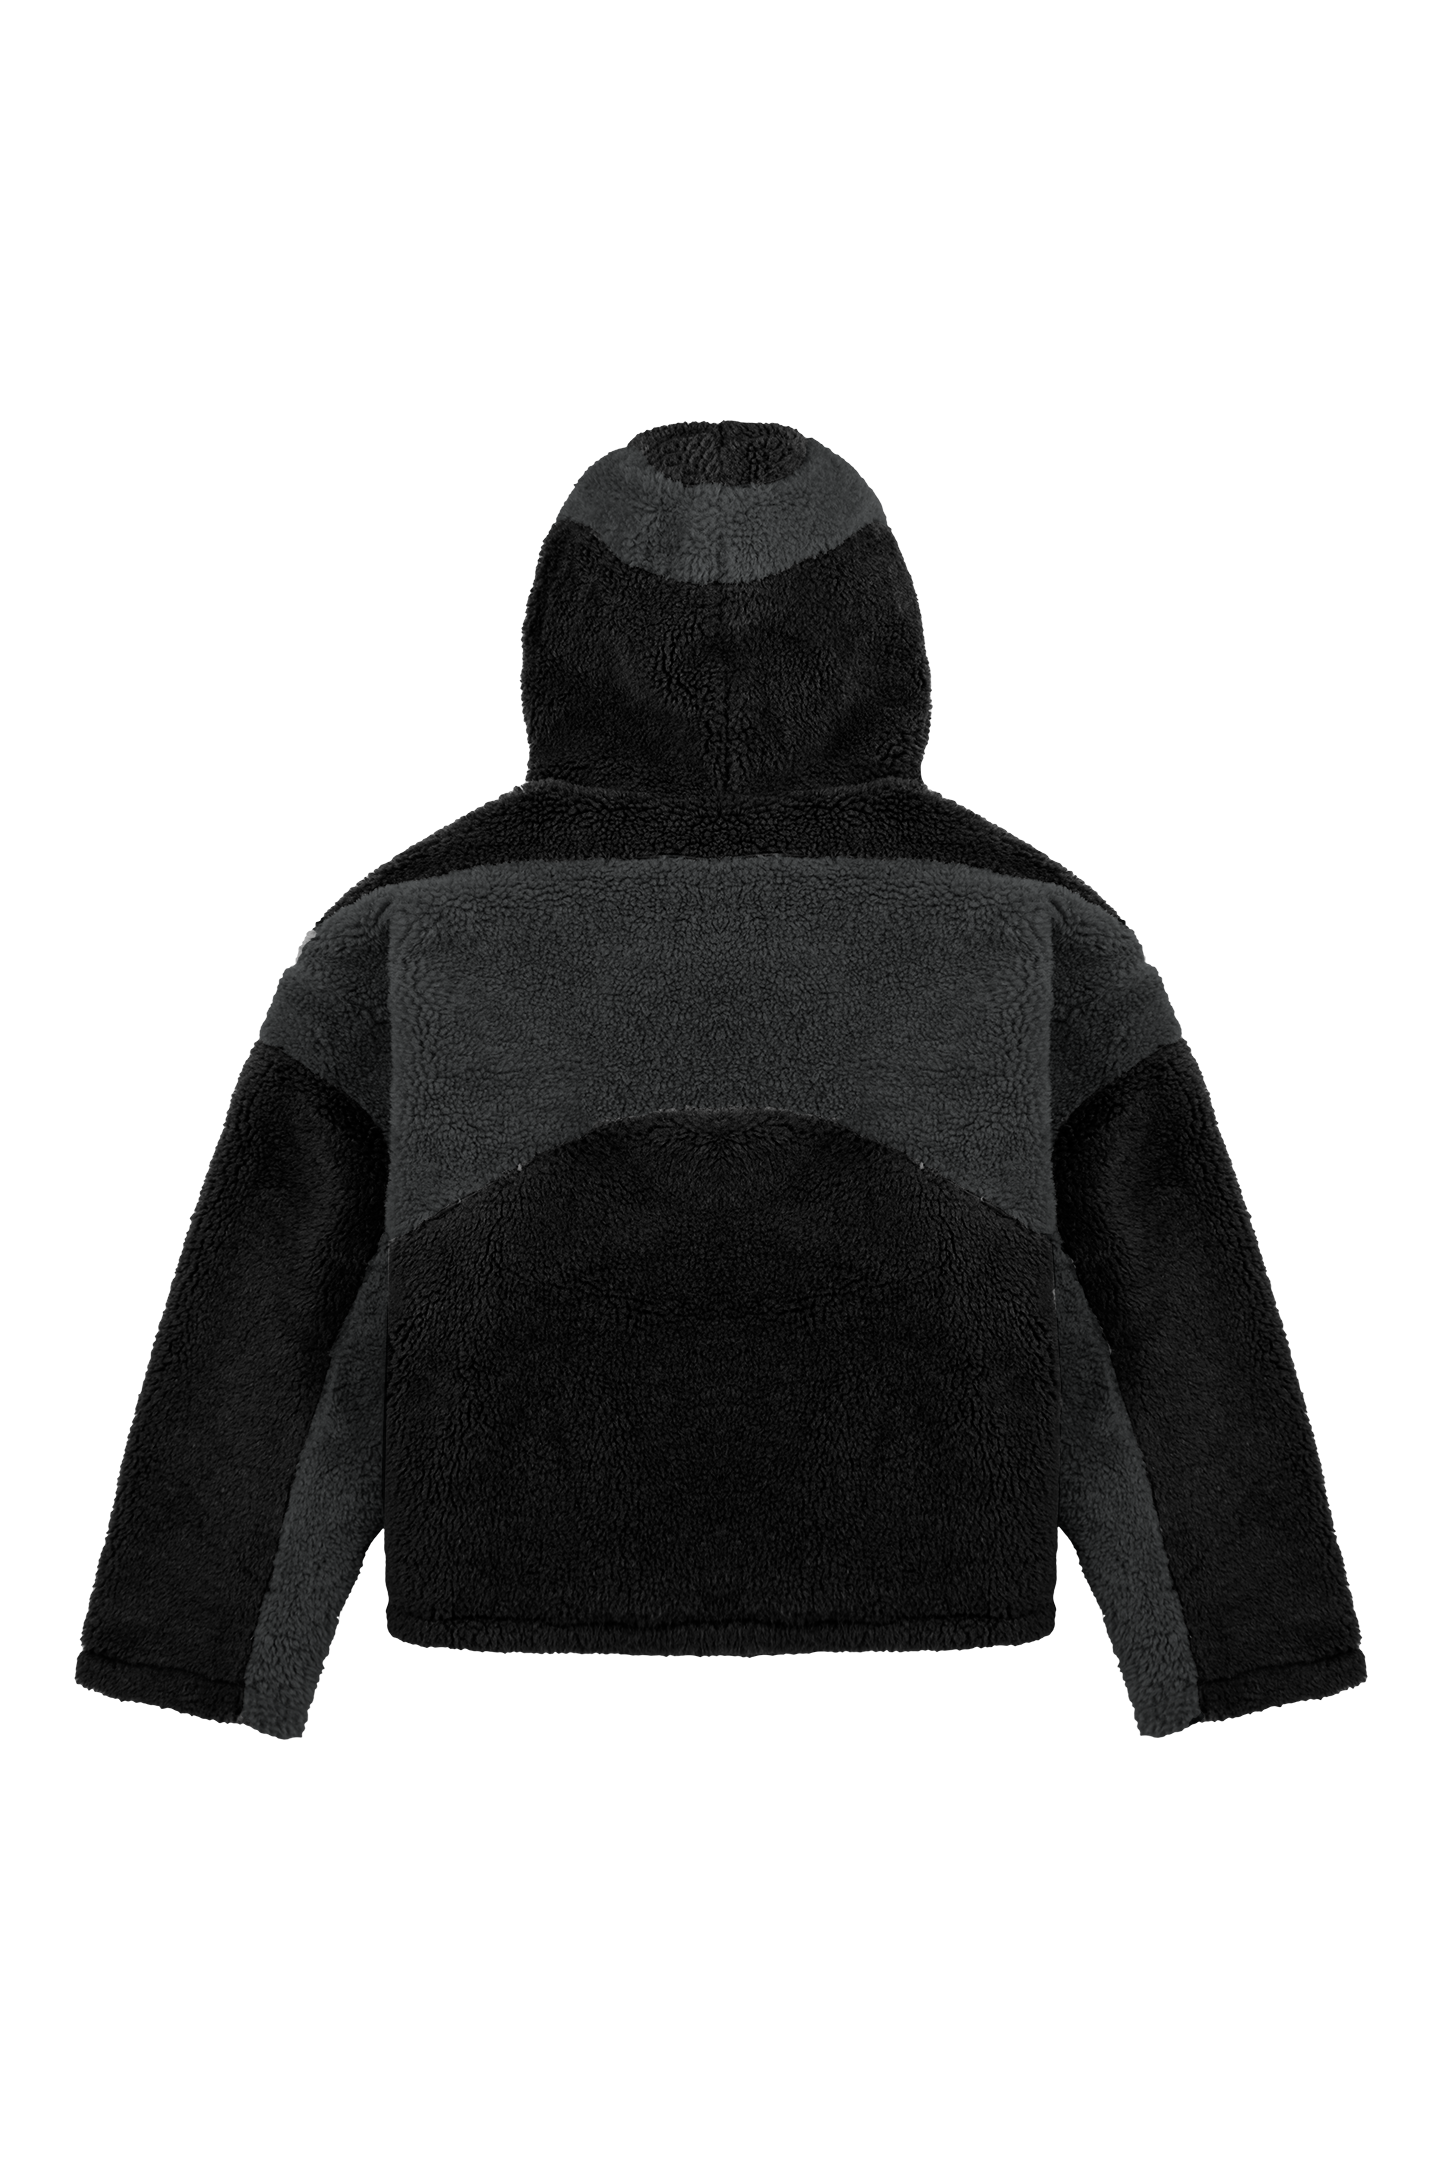 Black Fleece Jacket 2.0